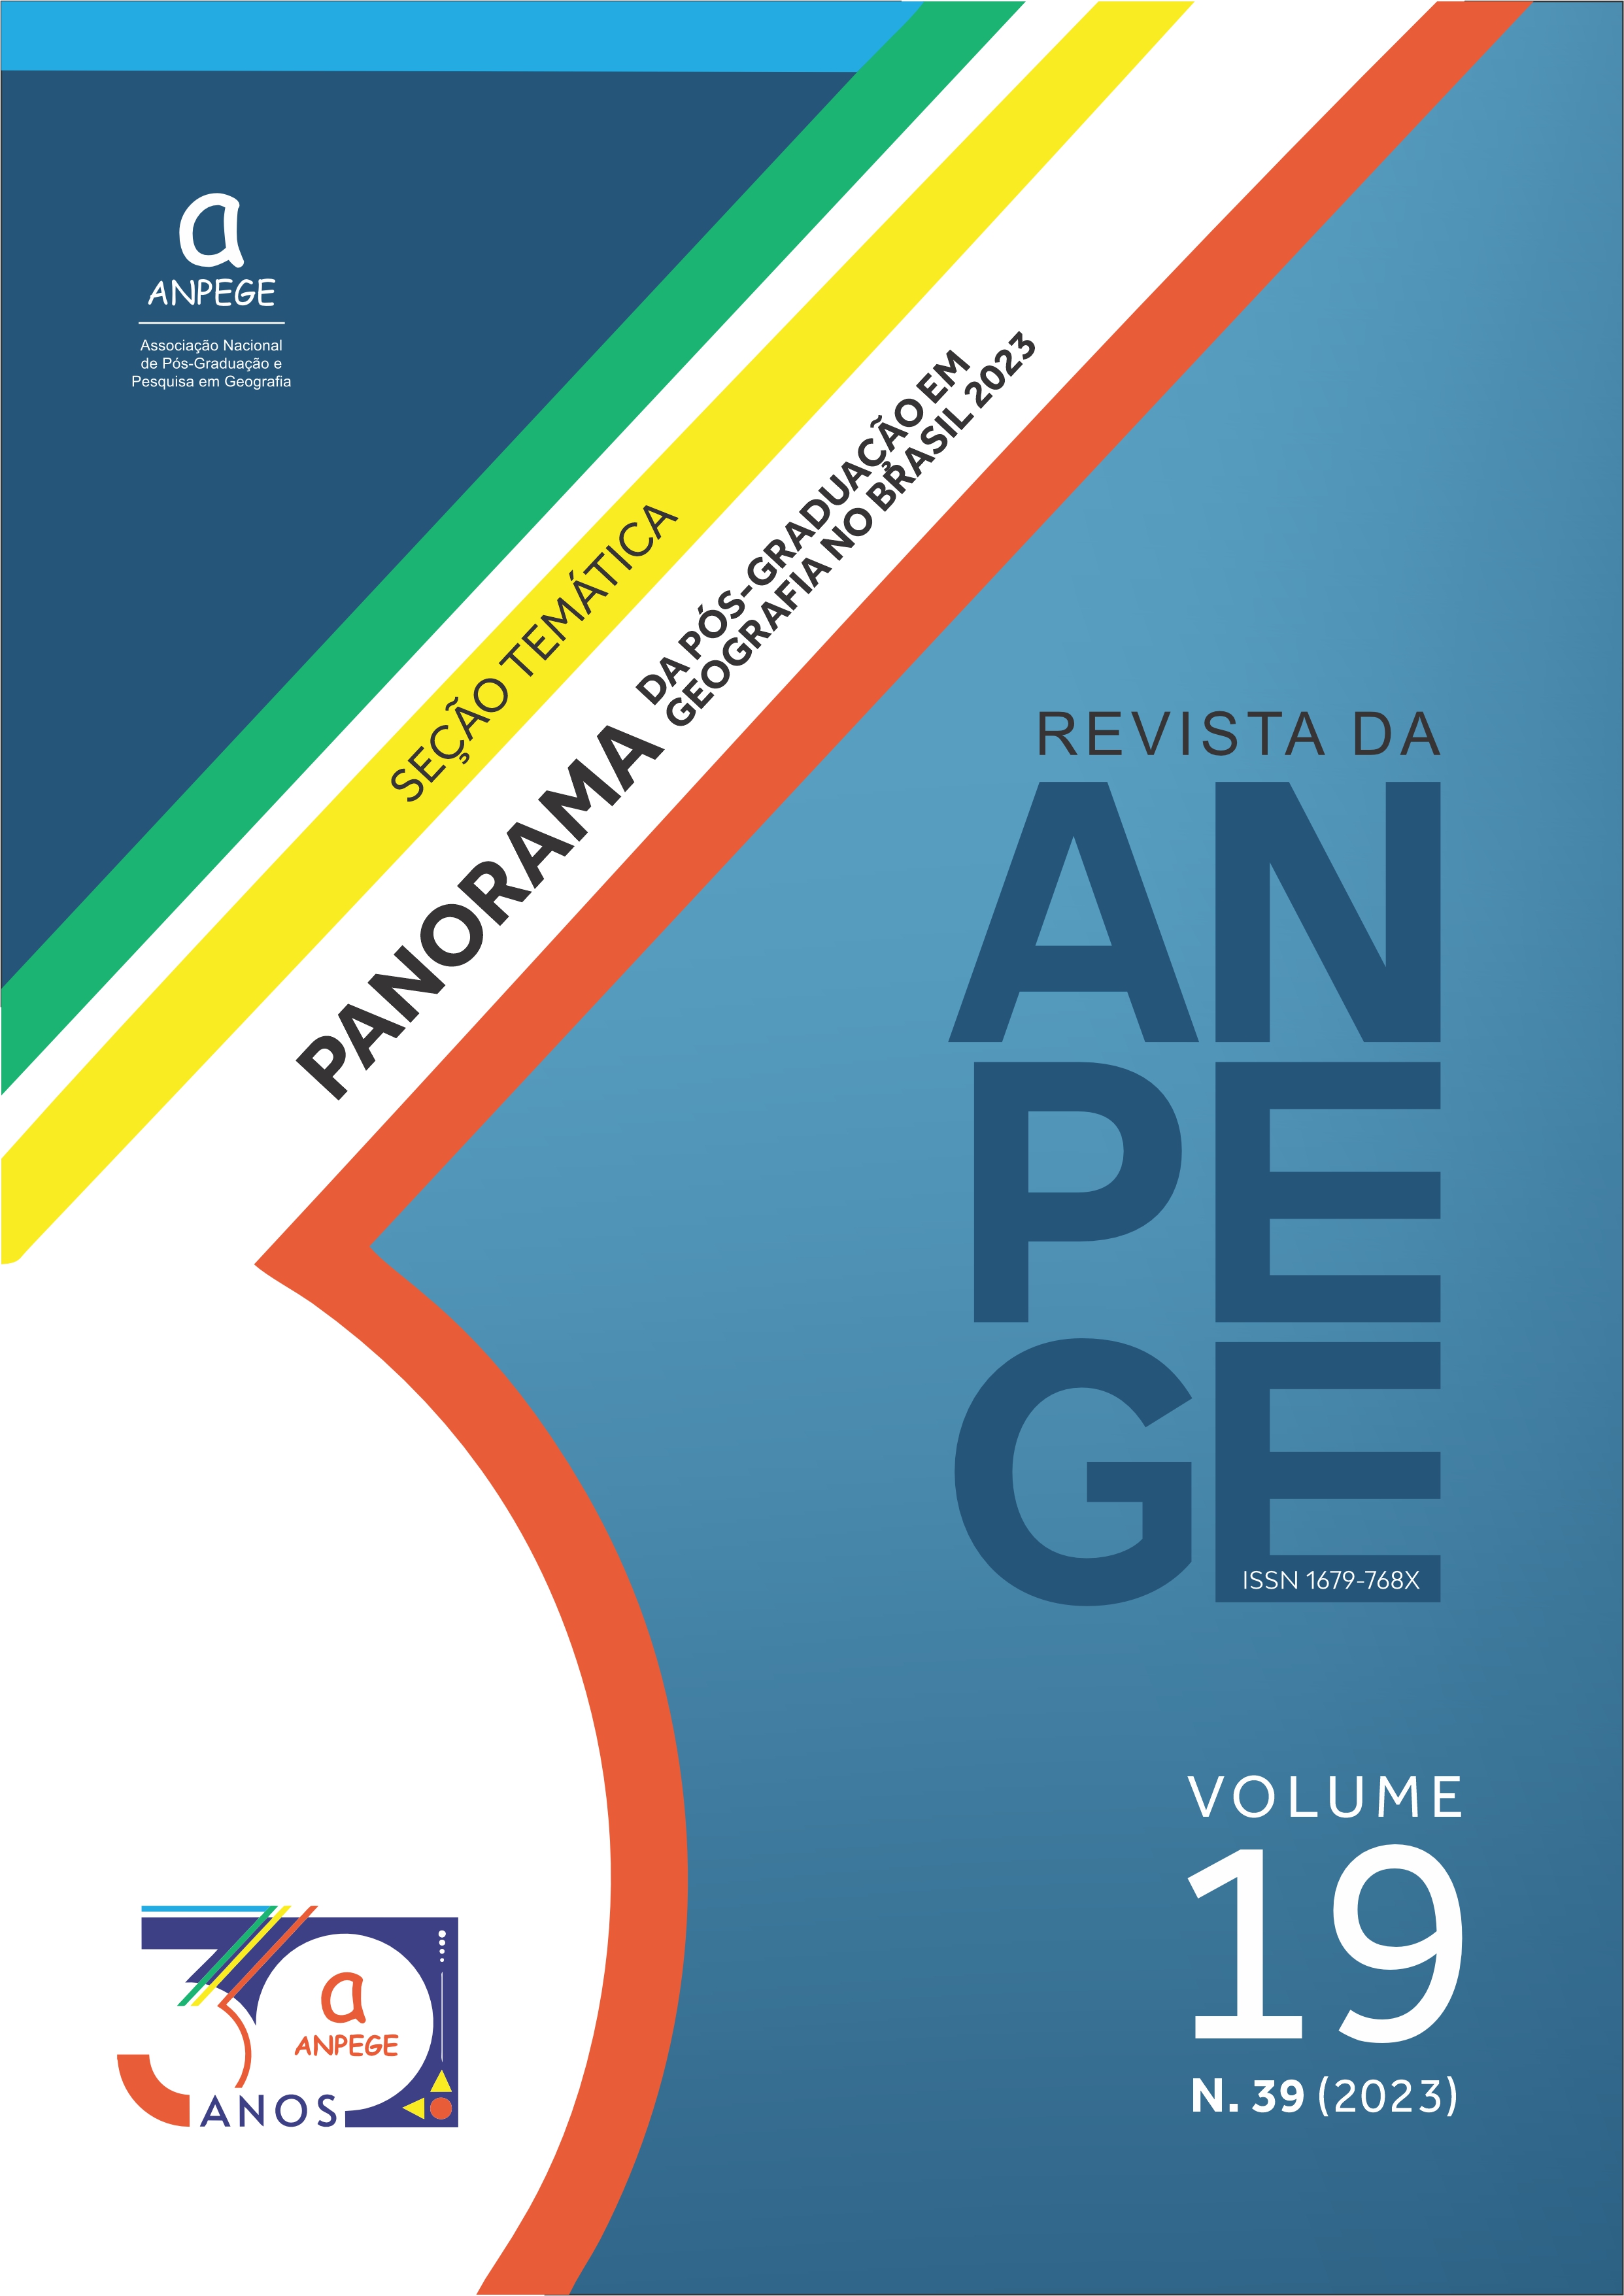 					View Vol. 19 No. 39 (2023): Revista da ANPEGE, Volume 19 Número 39
				